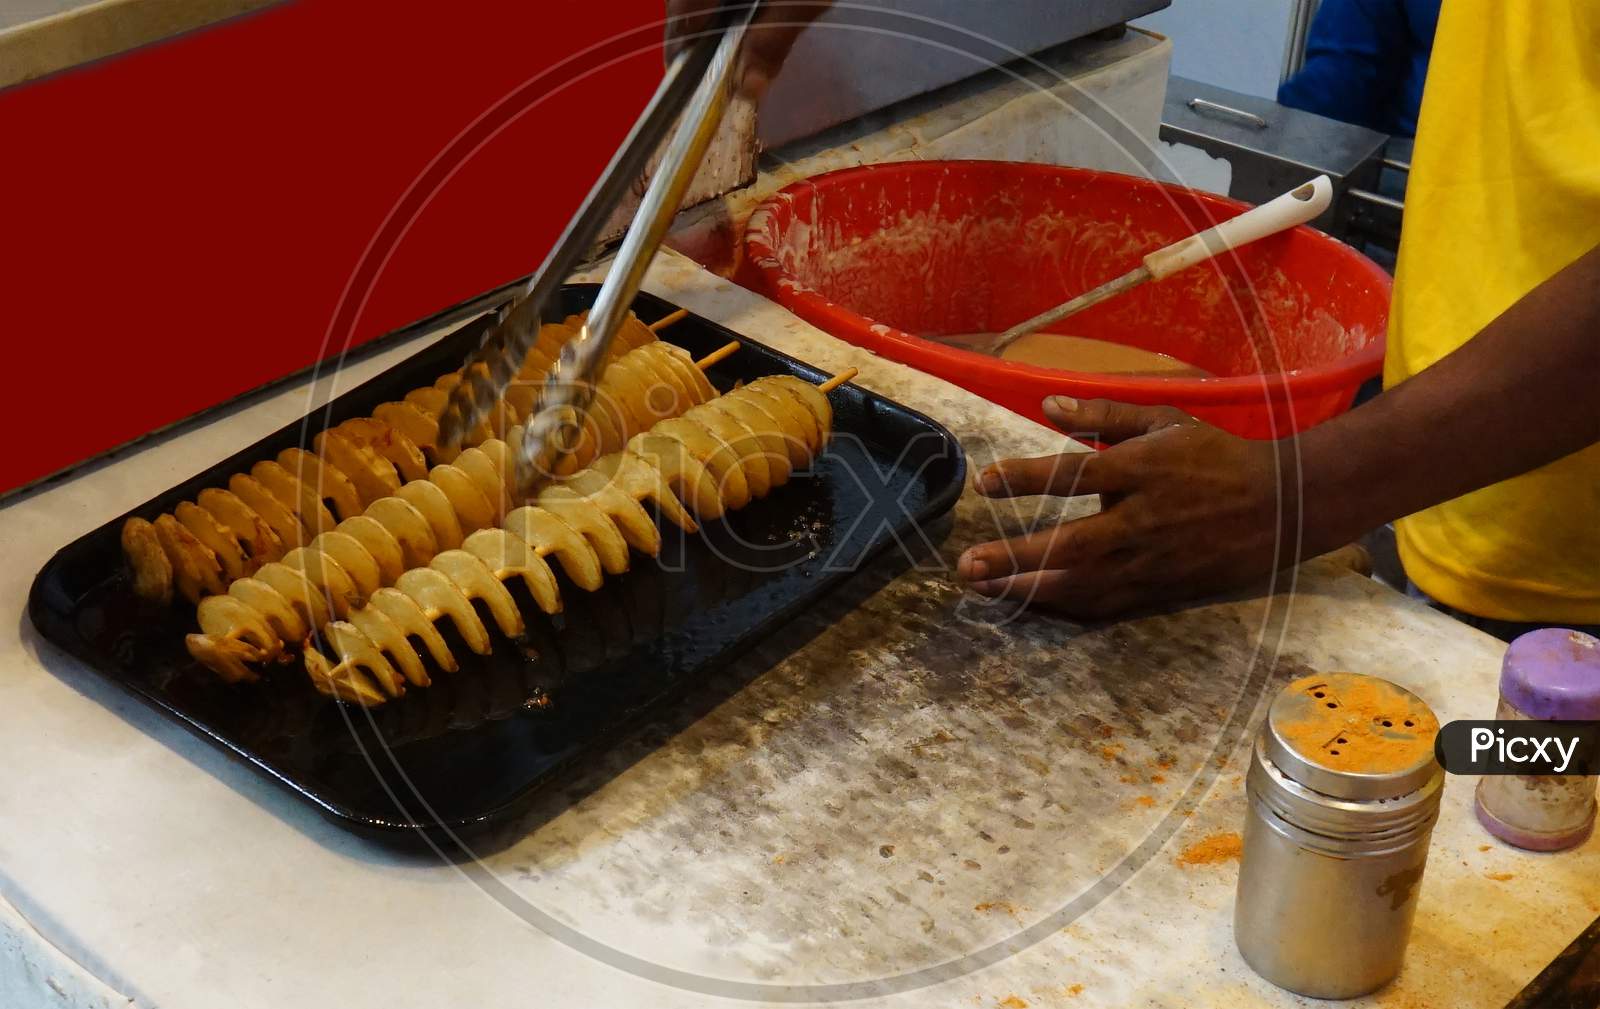 Indian Street Food Vendor Making Twisted Or Tornado Potato Chips